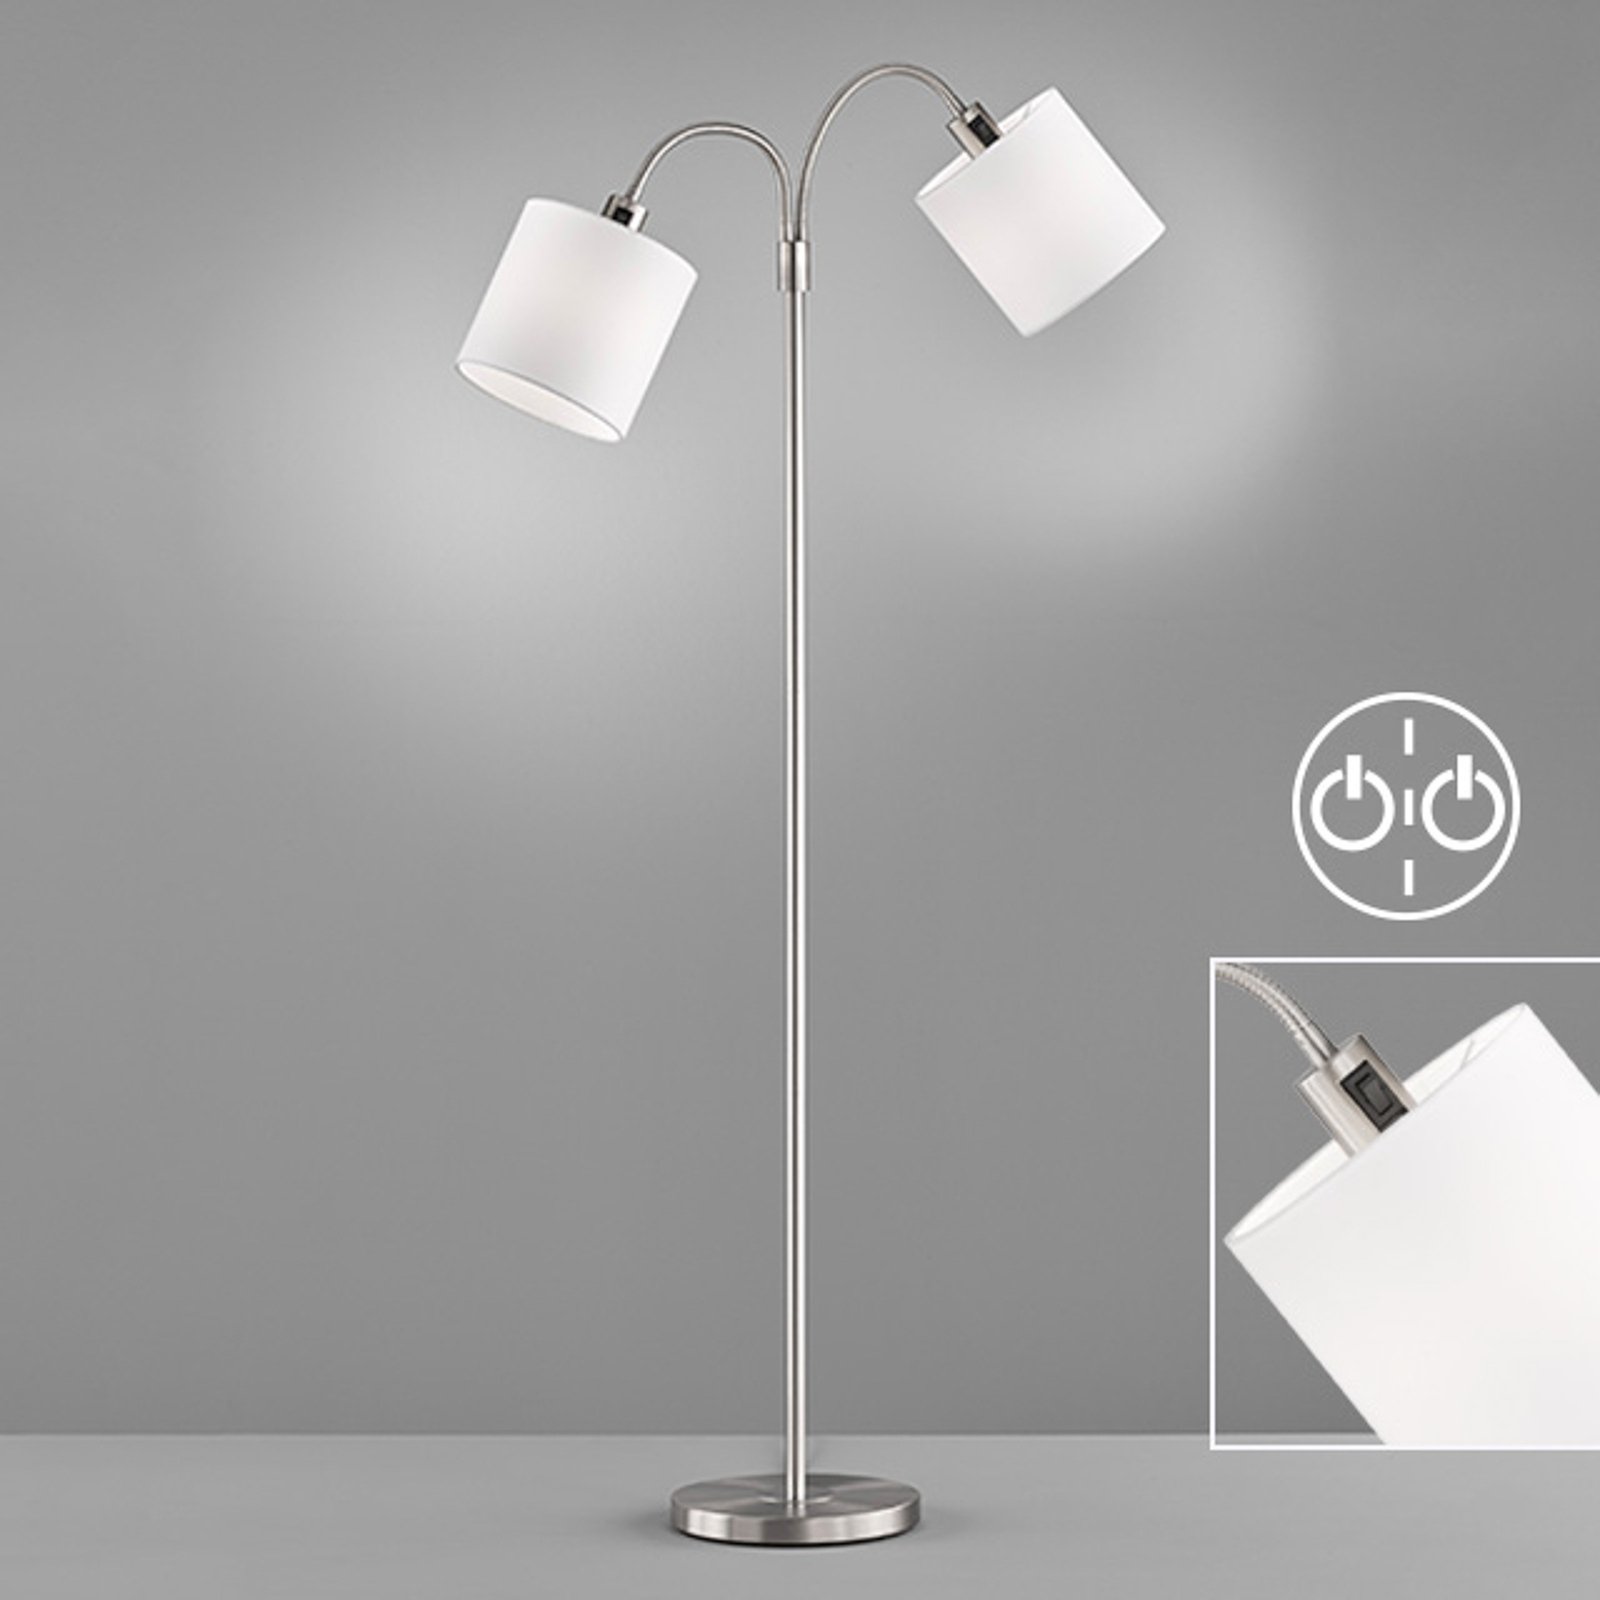 Vloerlamp Cozy, 2-lamps, stof, nikkel/wit